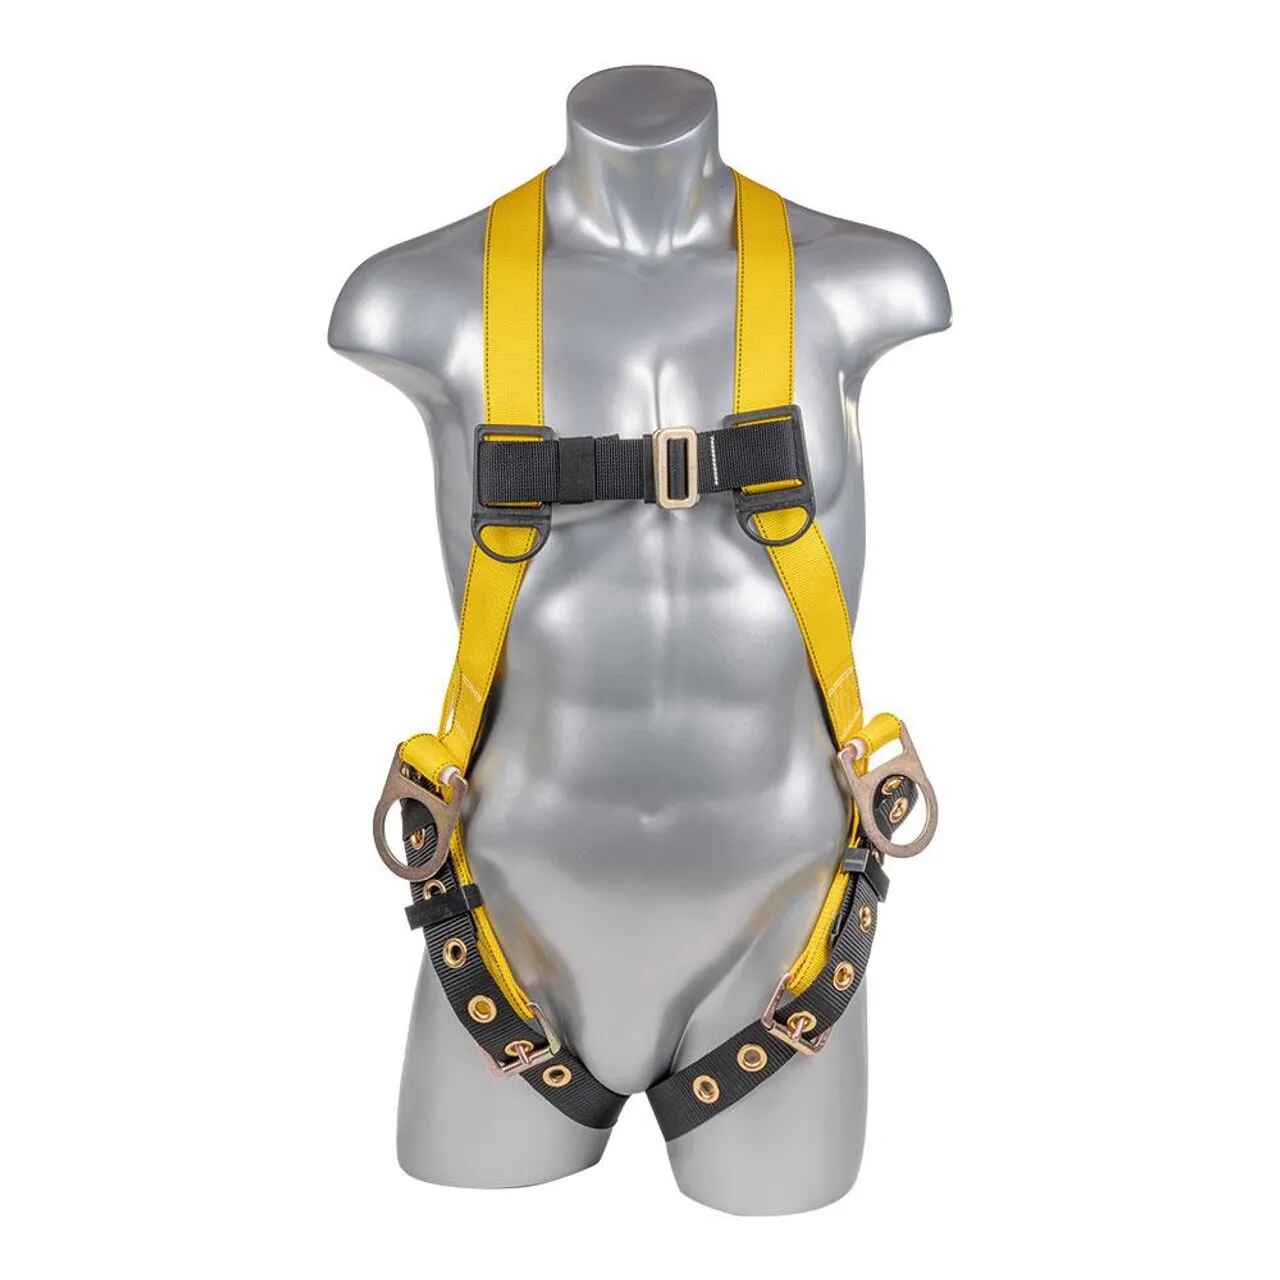 Construction Safety Harness/Vest Combo 3 Pt, Grommet Legs, Back D-Ring